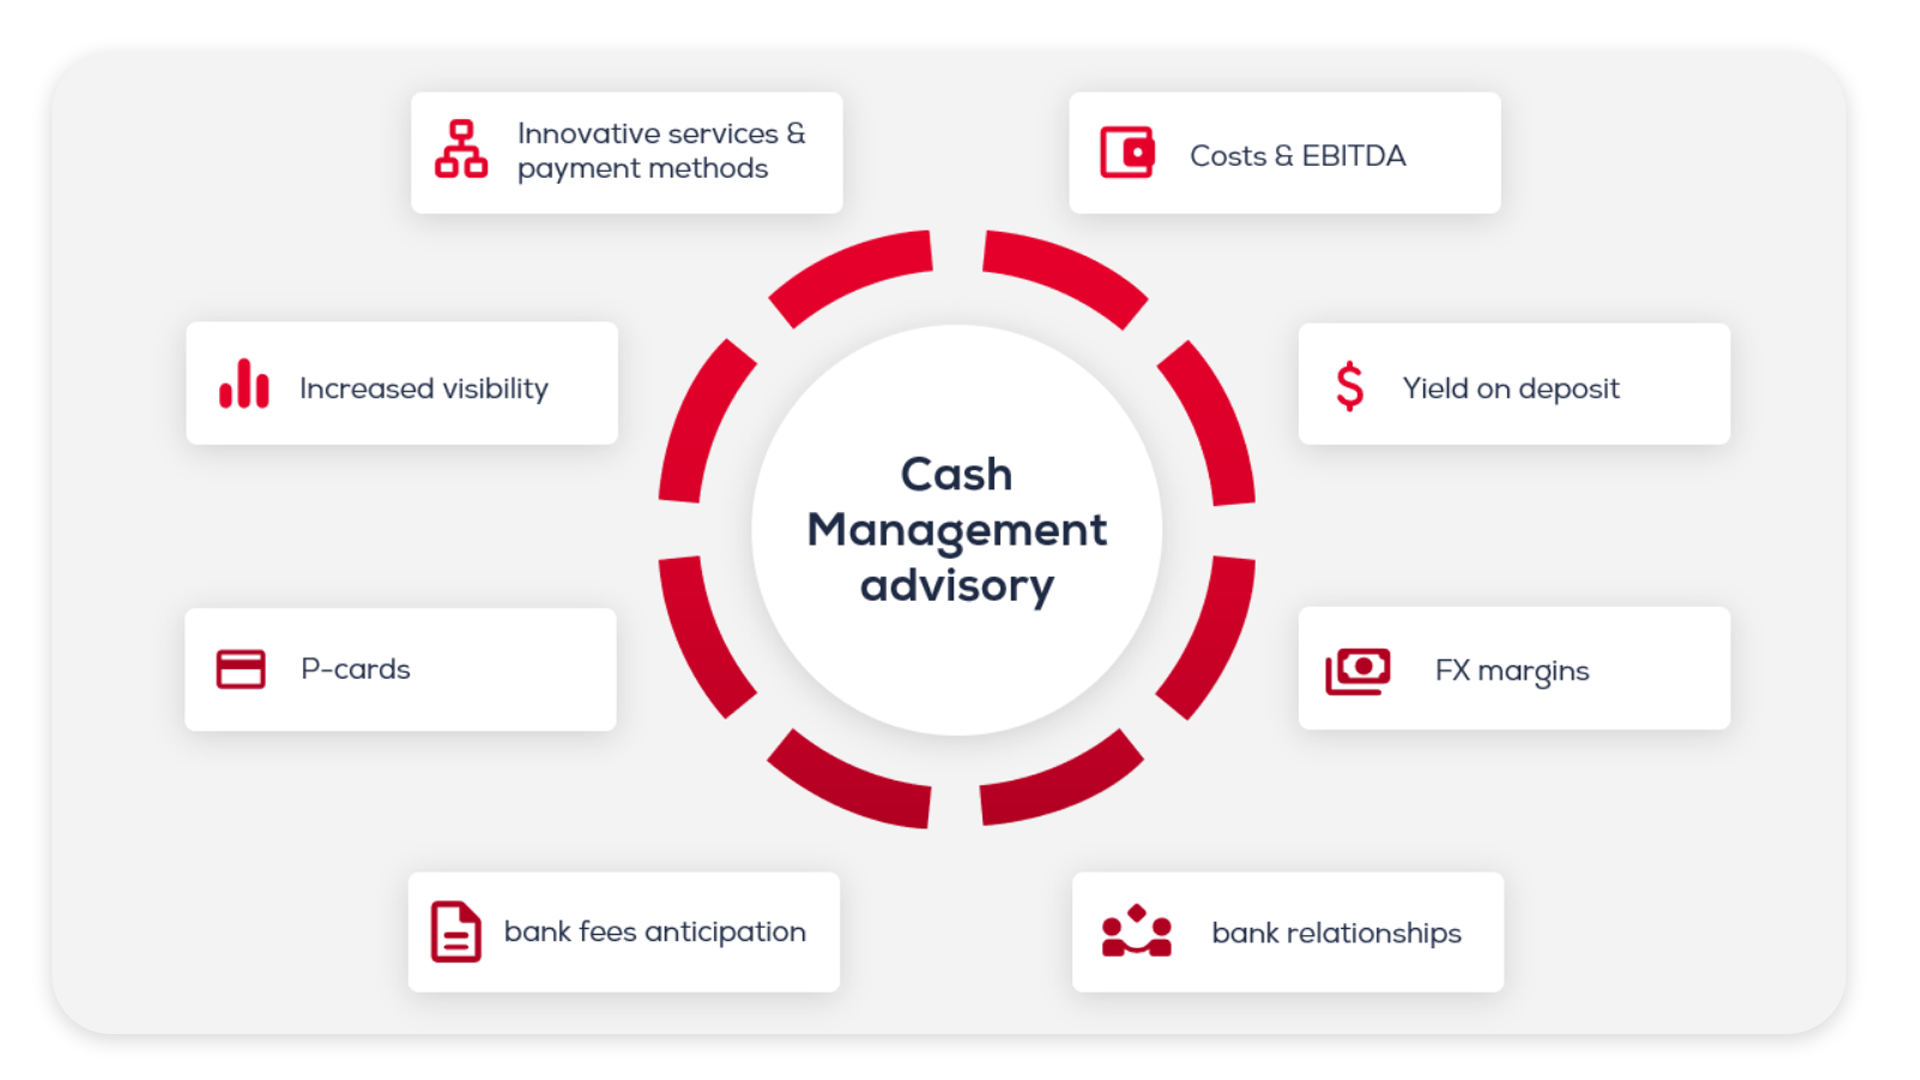 Cash management advisory wheel of services